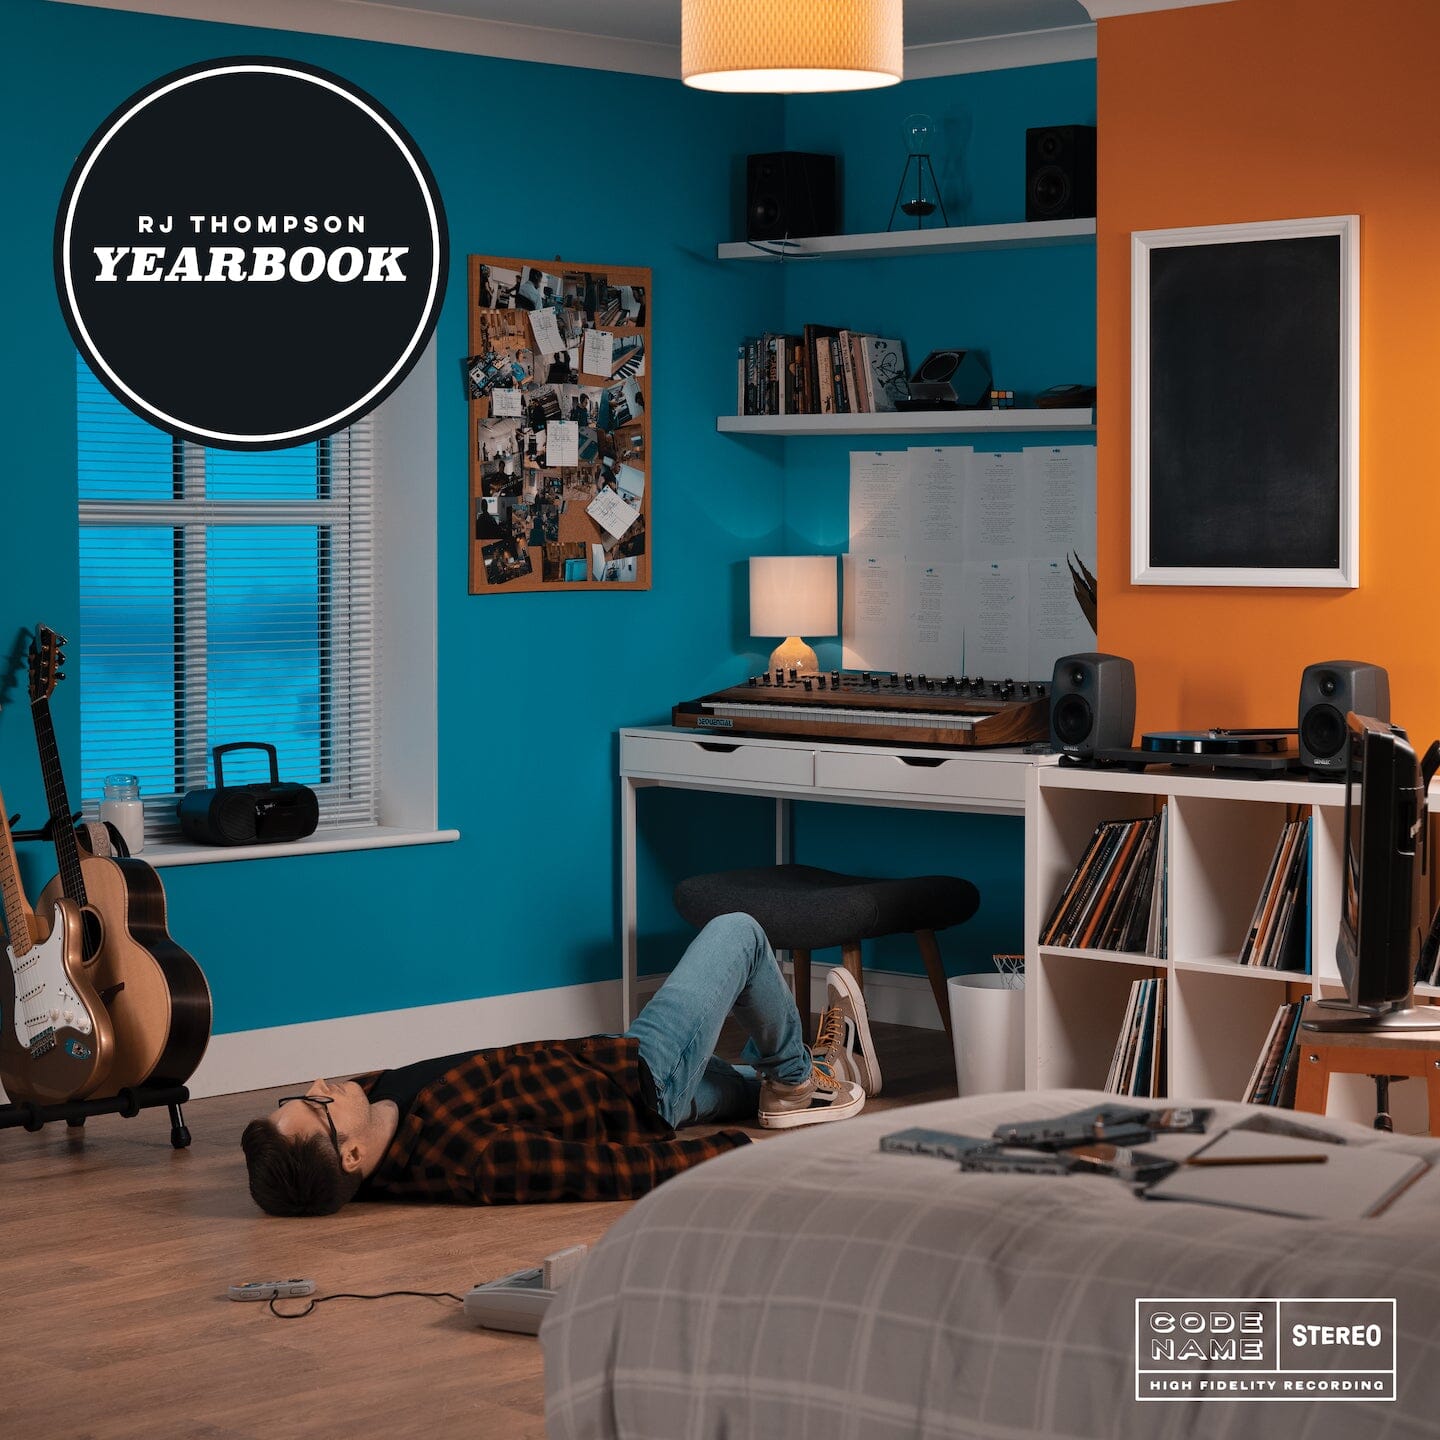 Yearbook - Digital Download | Single Music